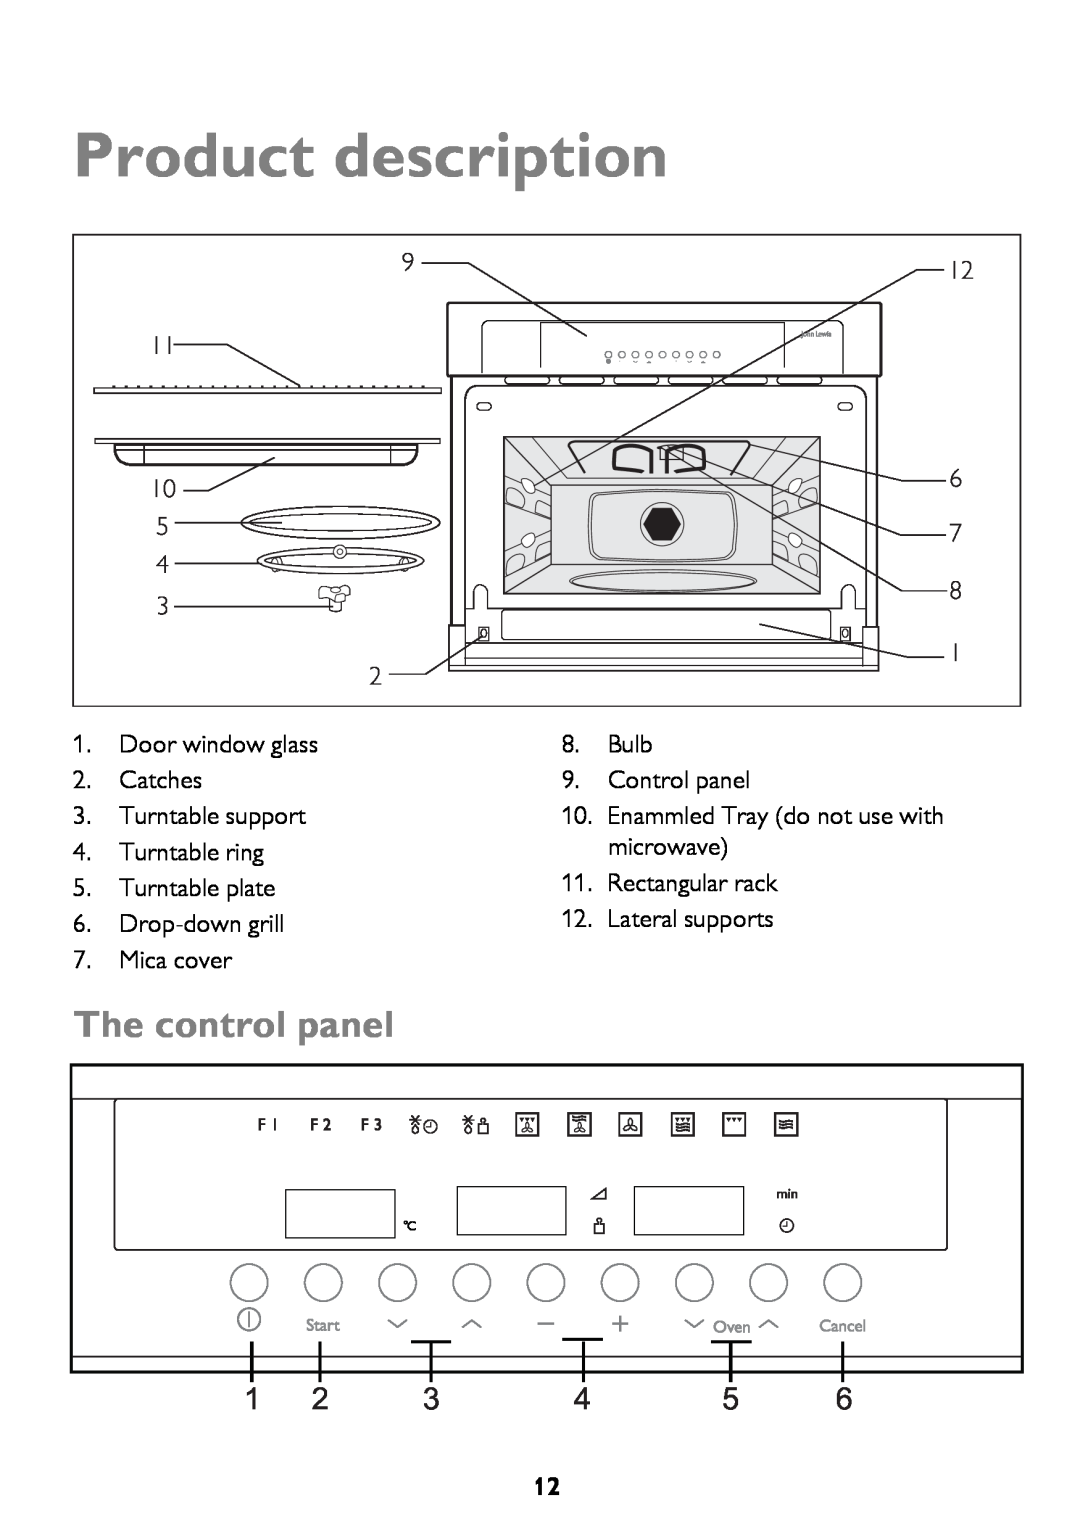 John Lewis JLBICO2 instruction manual Product description, The control panel, 9 11 10 5 